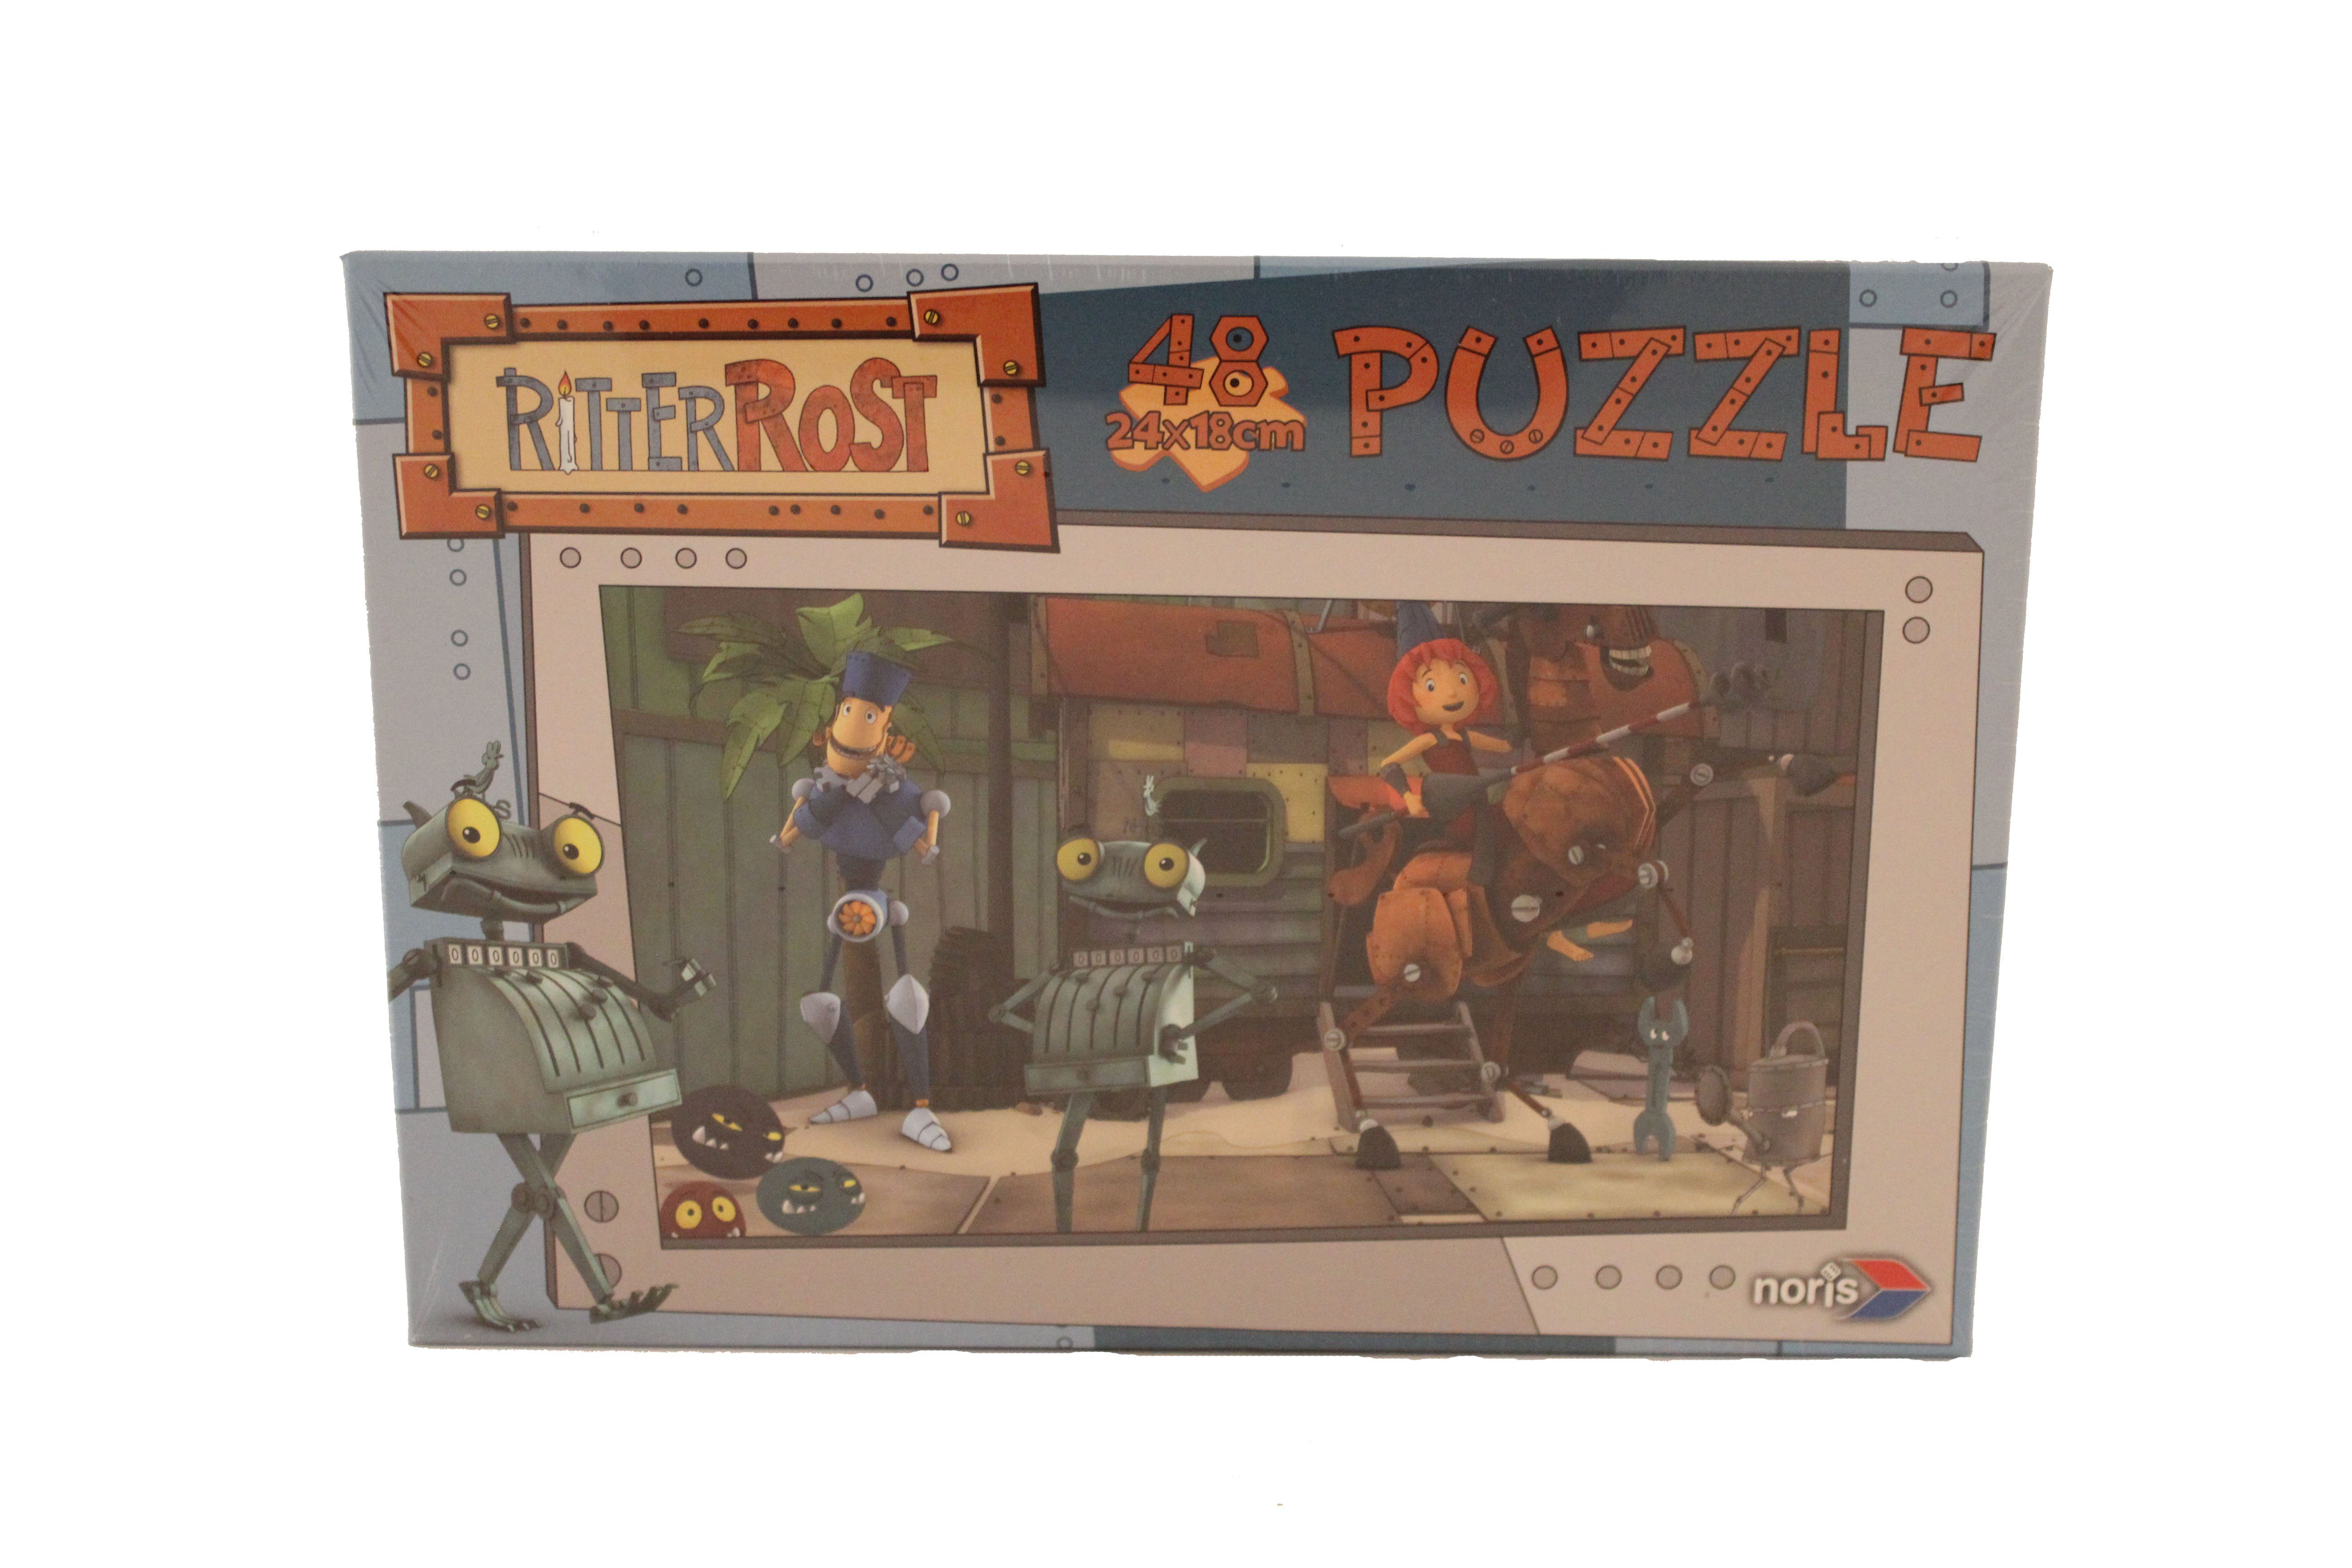 Noris Puzzle Ritter Rost Puzzle 48 Teile, 48 Puzzleteile